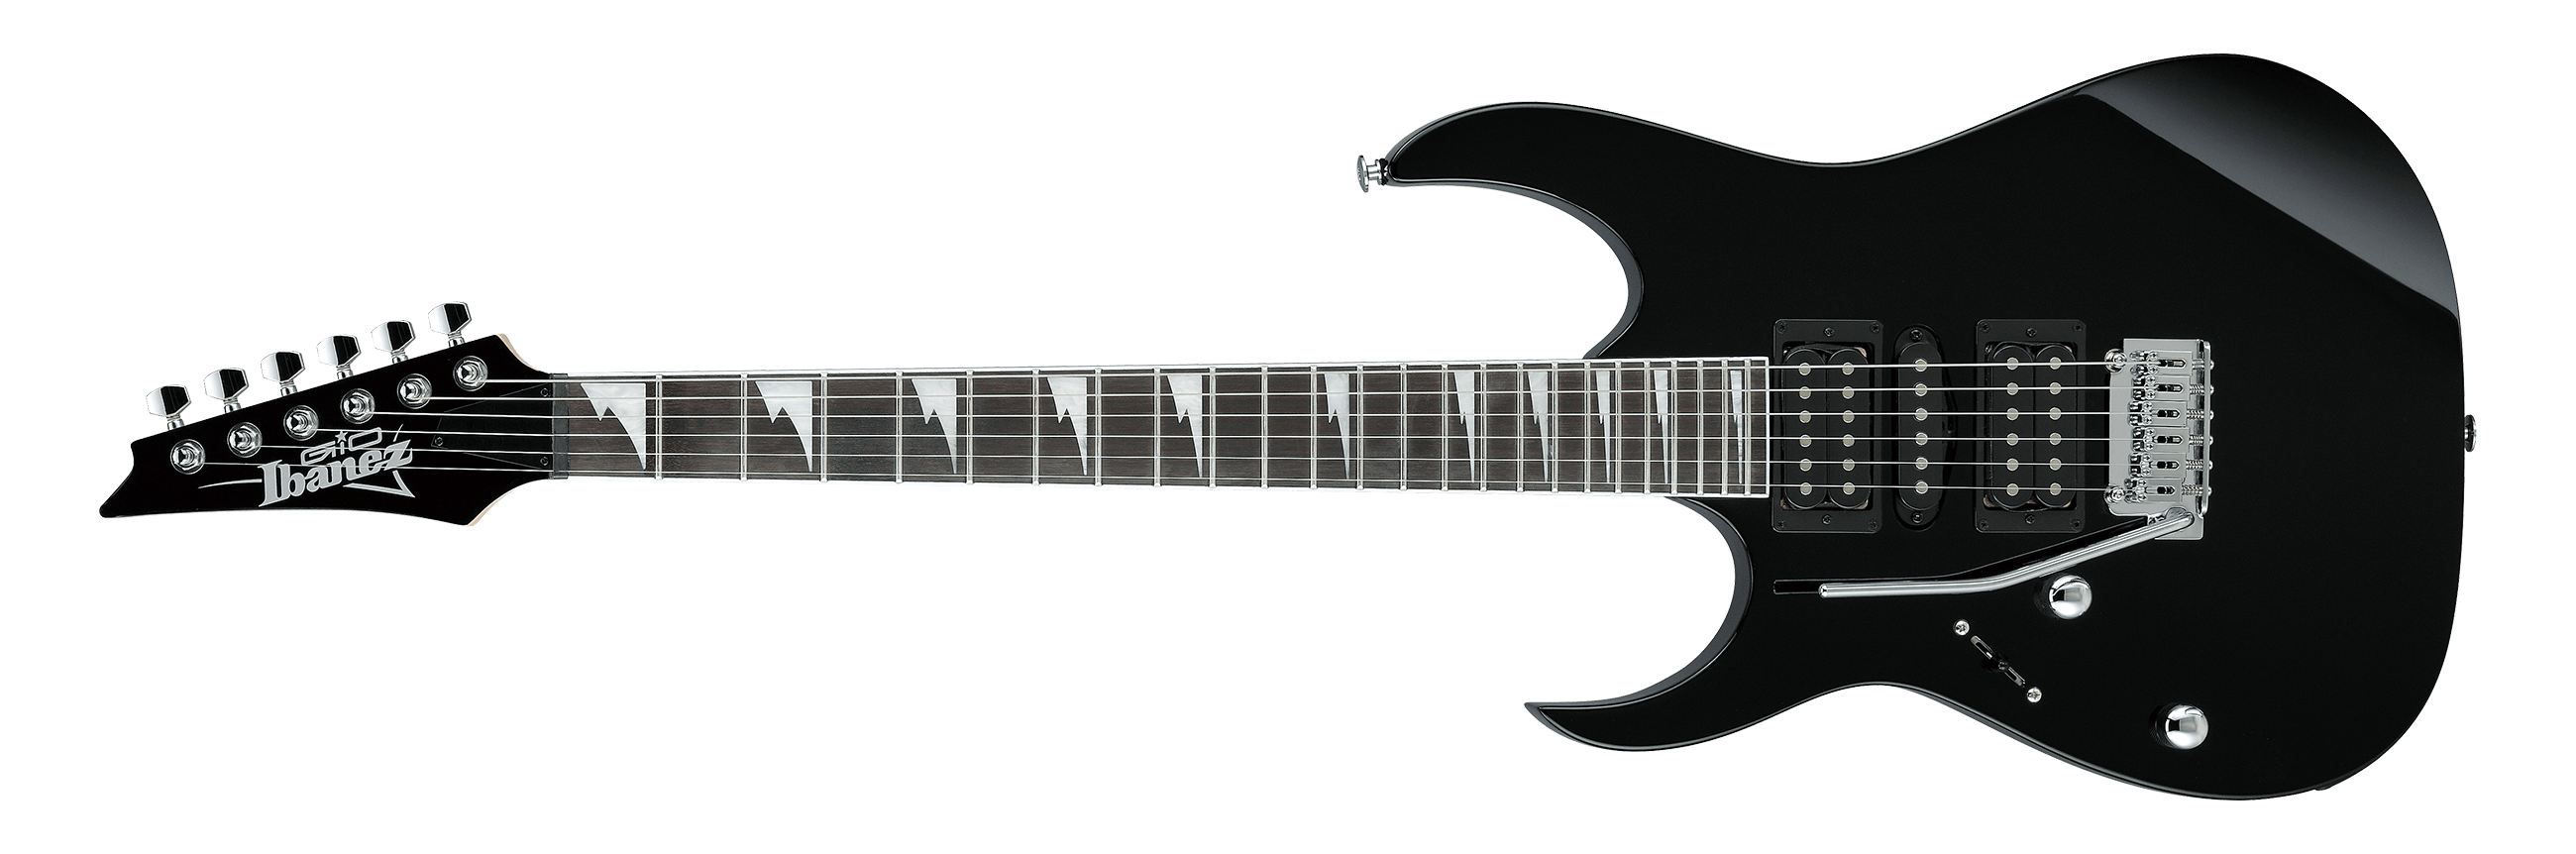 Ibañez - Guitarra Eléctrica RG Zurda, Color: Negra Mod.GRG170DXL-BKN_2